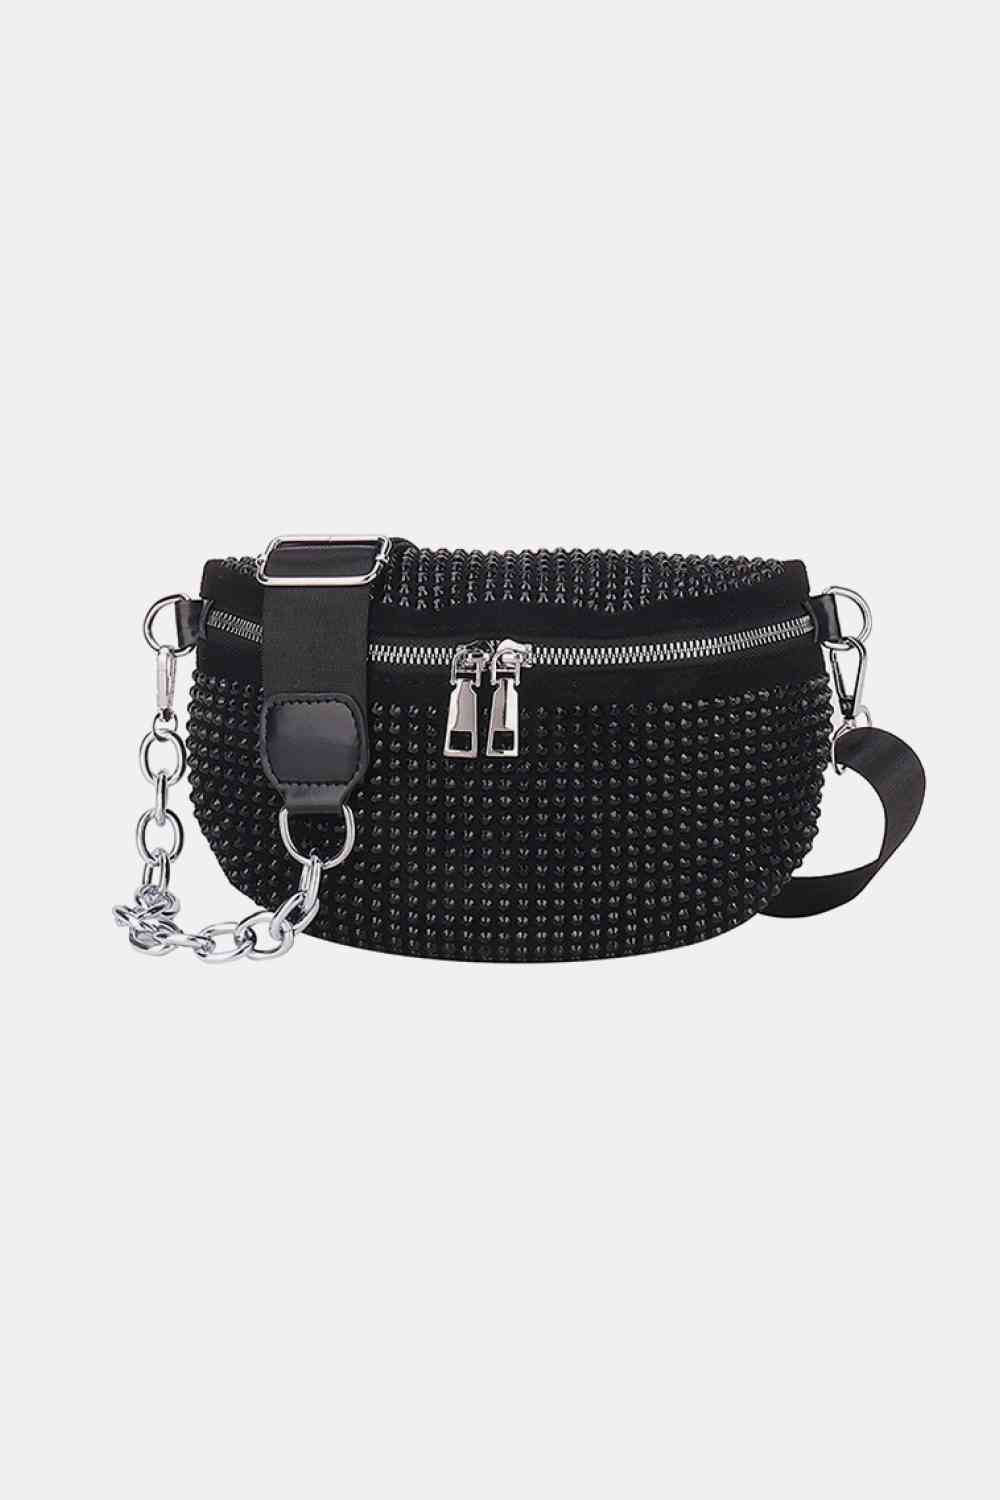 TEEK - Rhinestone PU Leather Sling Bag BAG TEEK Trend Black  